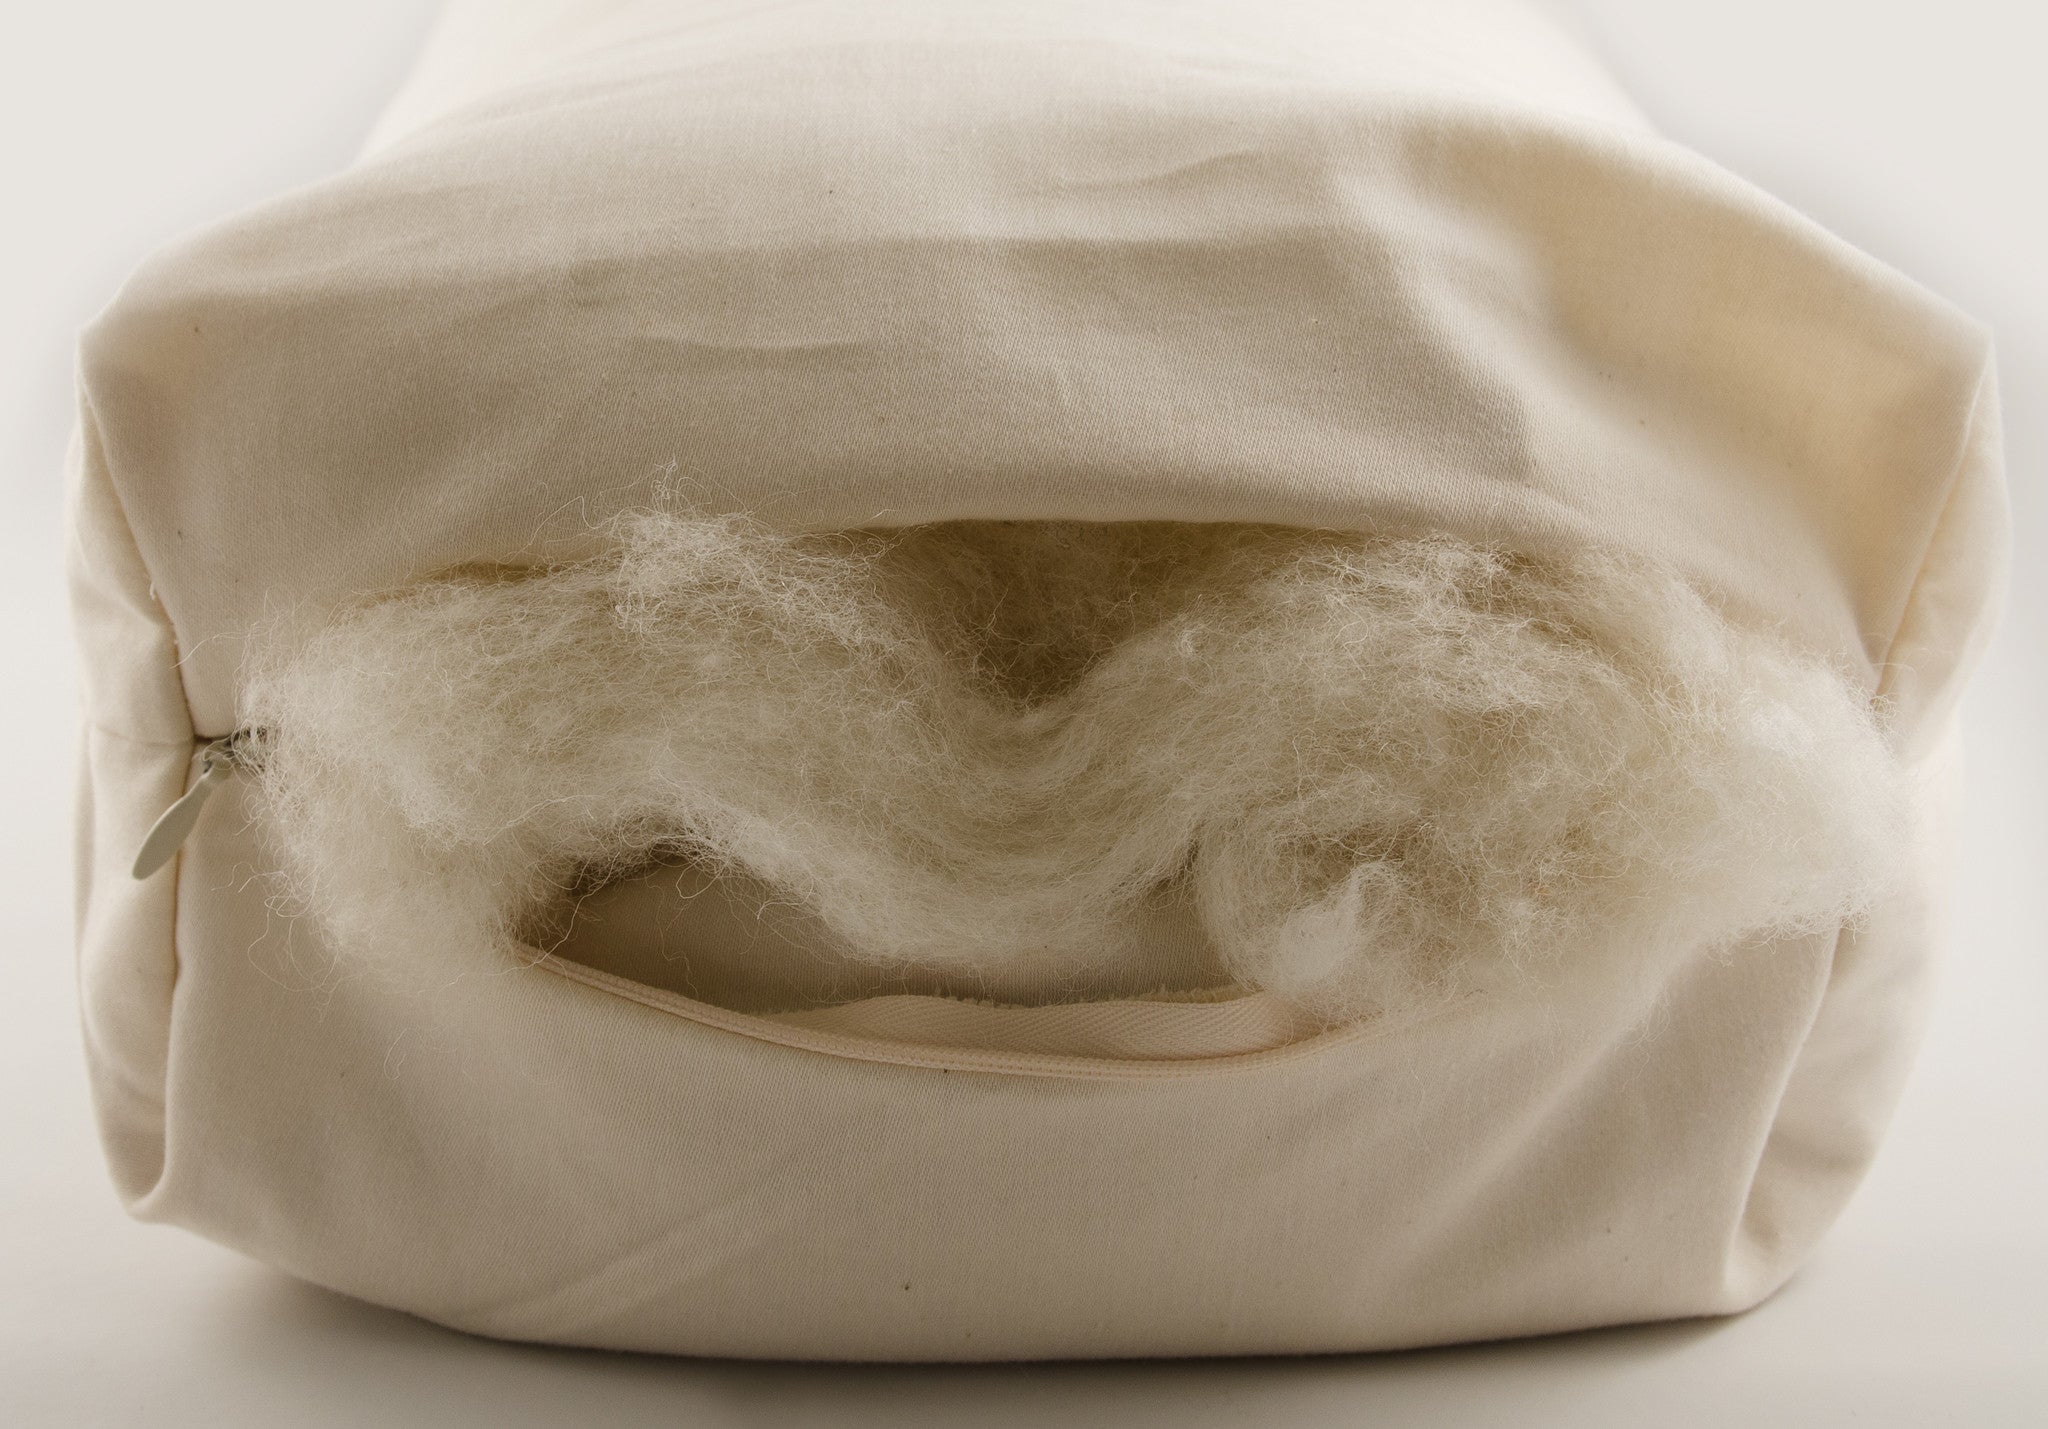 Shambho Pillow: Natural Wool & Millet